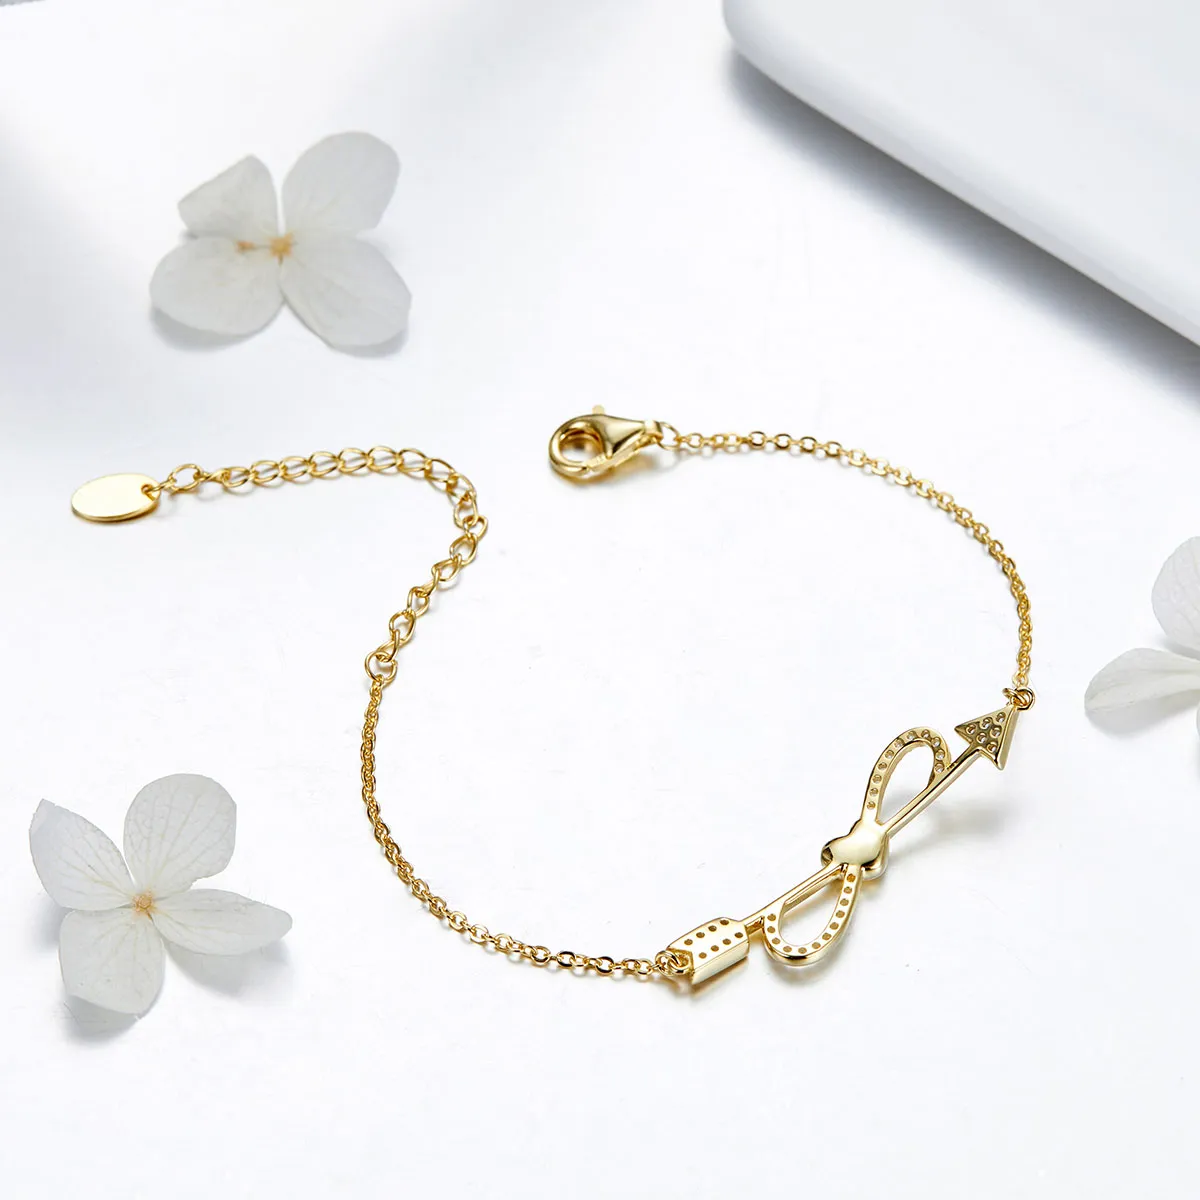 Pandora Style Gold-Plated Love On String Chain Slider Bracelet - SCB126